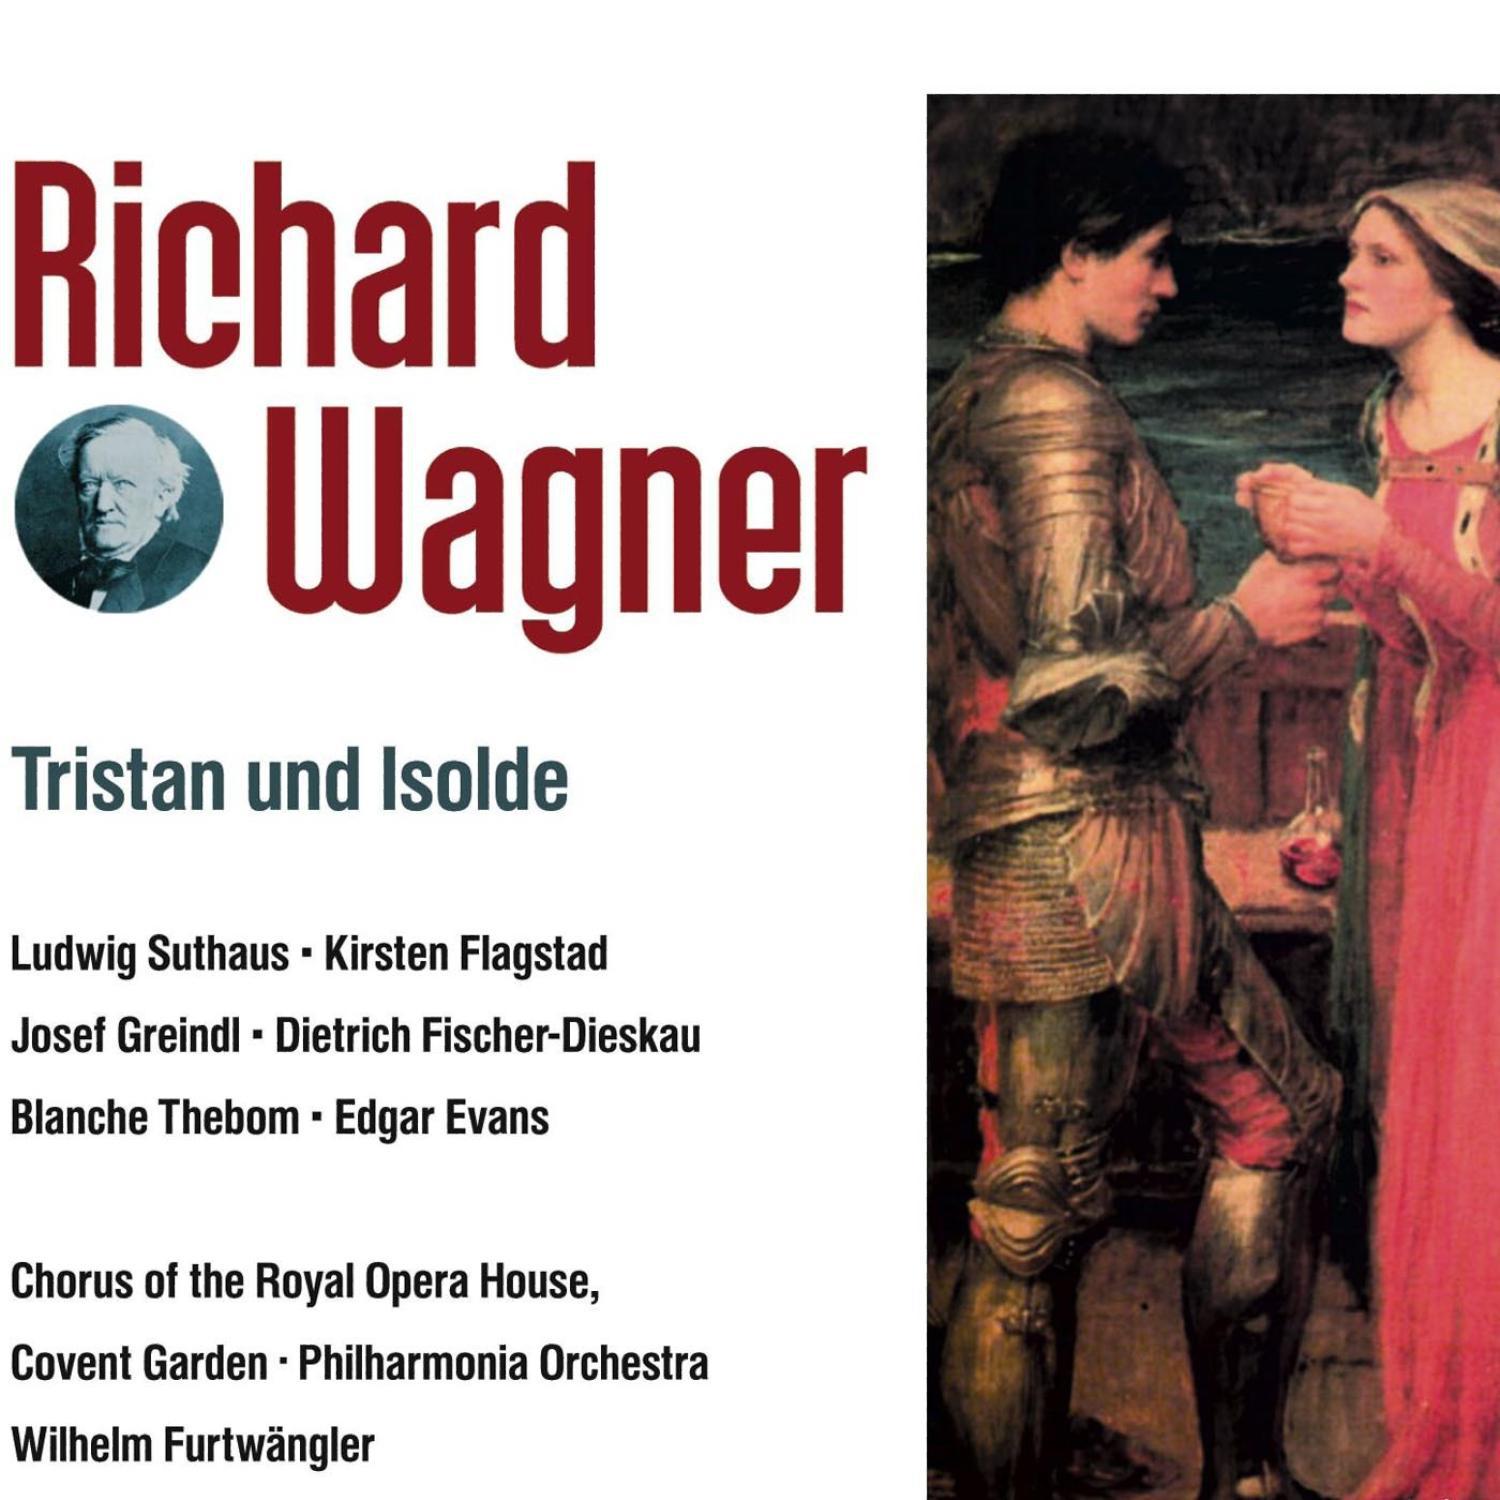 Tristan und Isolde-1 Aufzug Szene 5: War Morold dir so wert